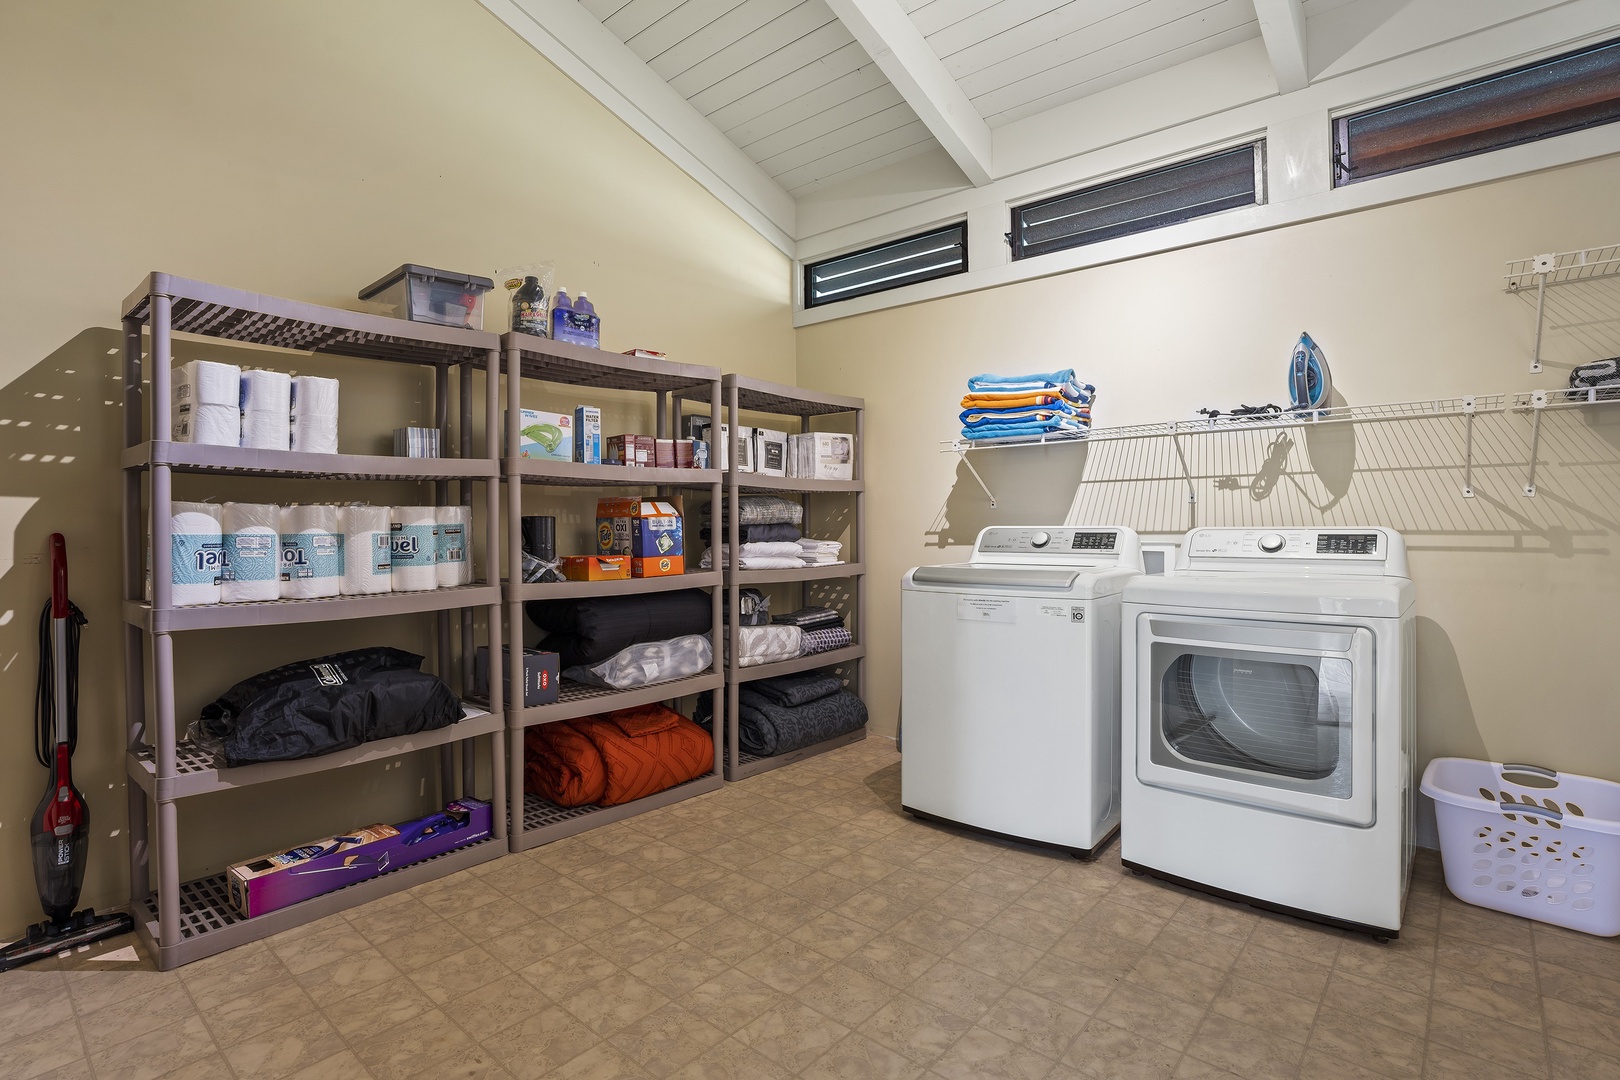 Kailua Kona Vacation Rentals, Pineapple House - Spacious laundry (provisions not guaranteed)